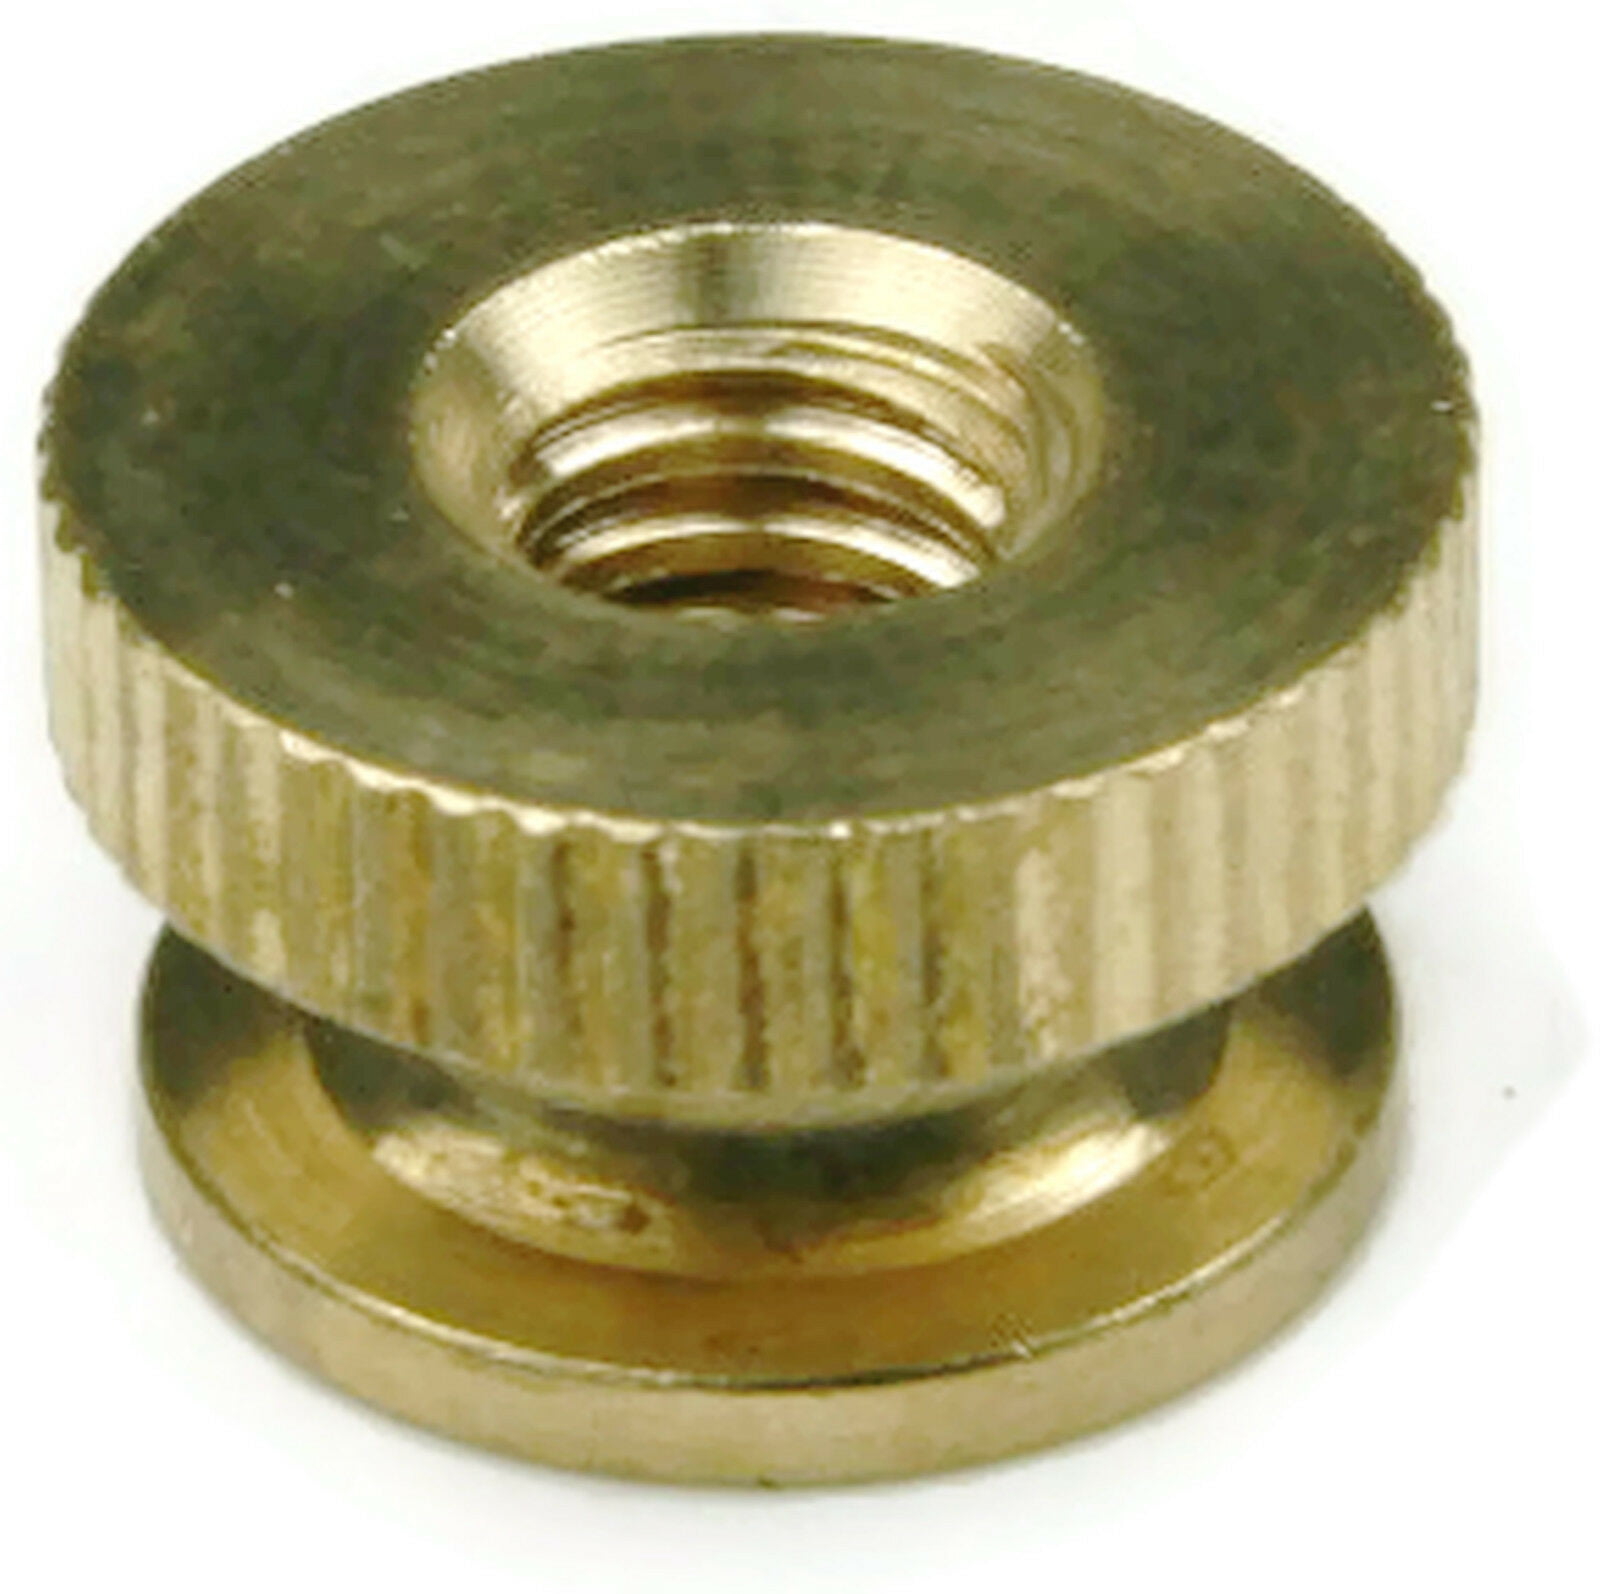 Qty 100 Brass Solid Knurled Thumb Nut UNC 1/4-20 